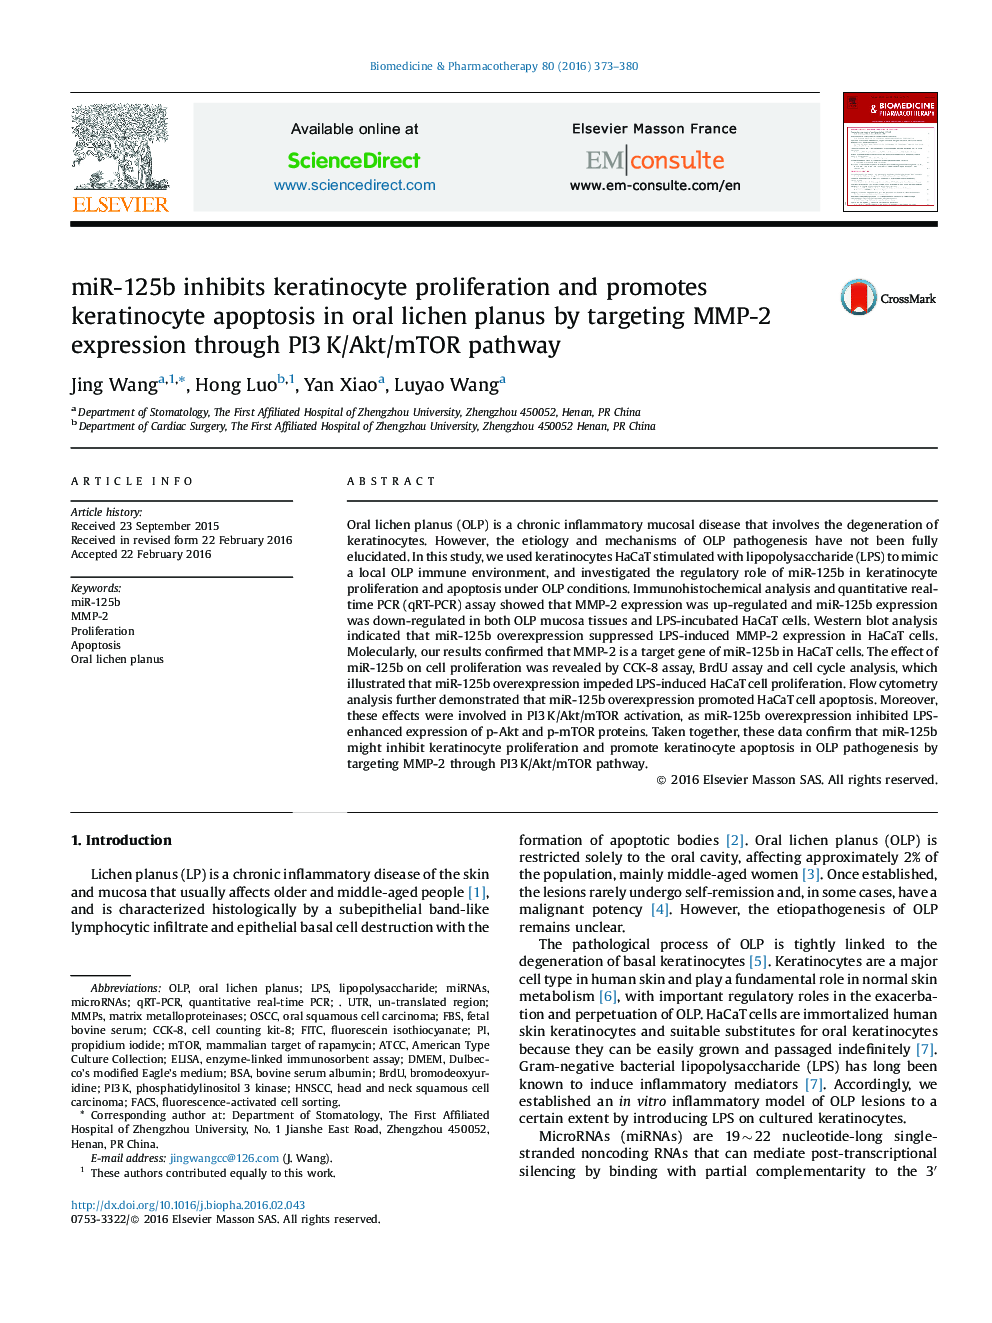 miR-125b inhibits keratinocyte proliferation and promotes keratinocyte apoptosis in oral lichen planus by targeting MMP-2 expression through PI3 K/Akt/mTOR pathway